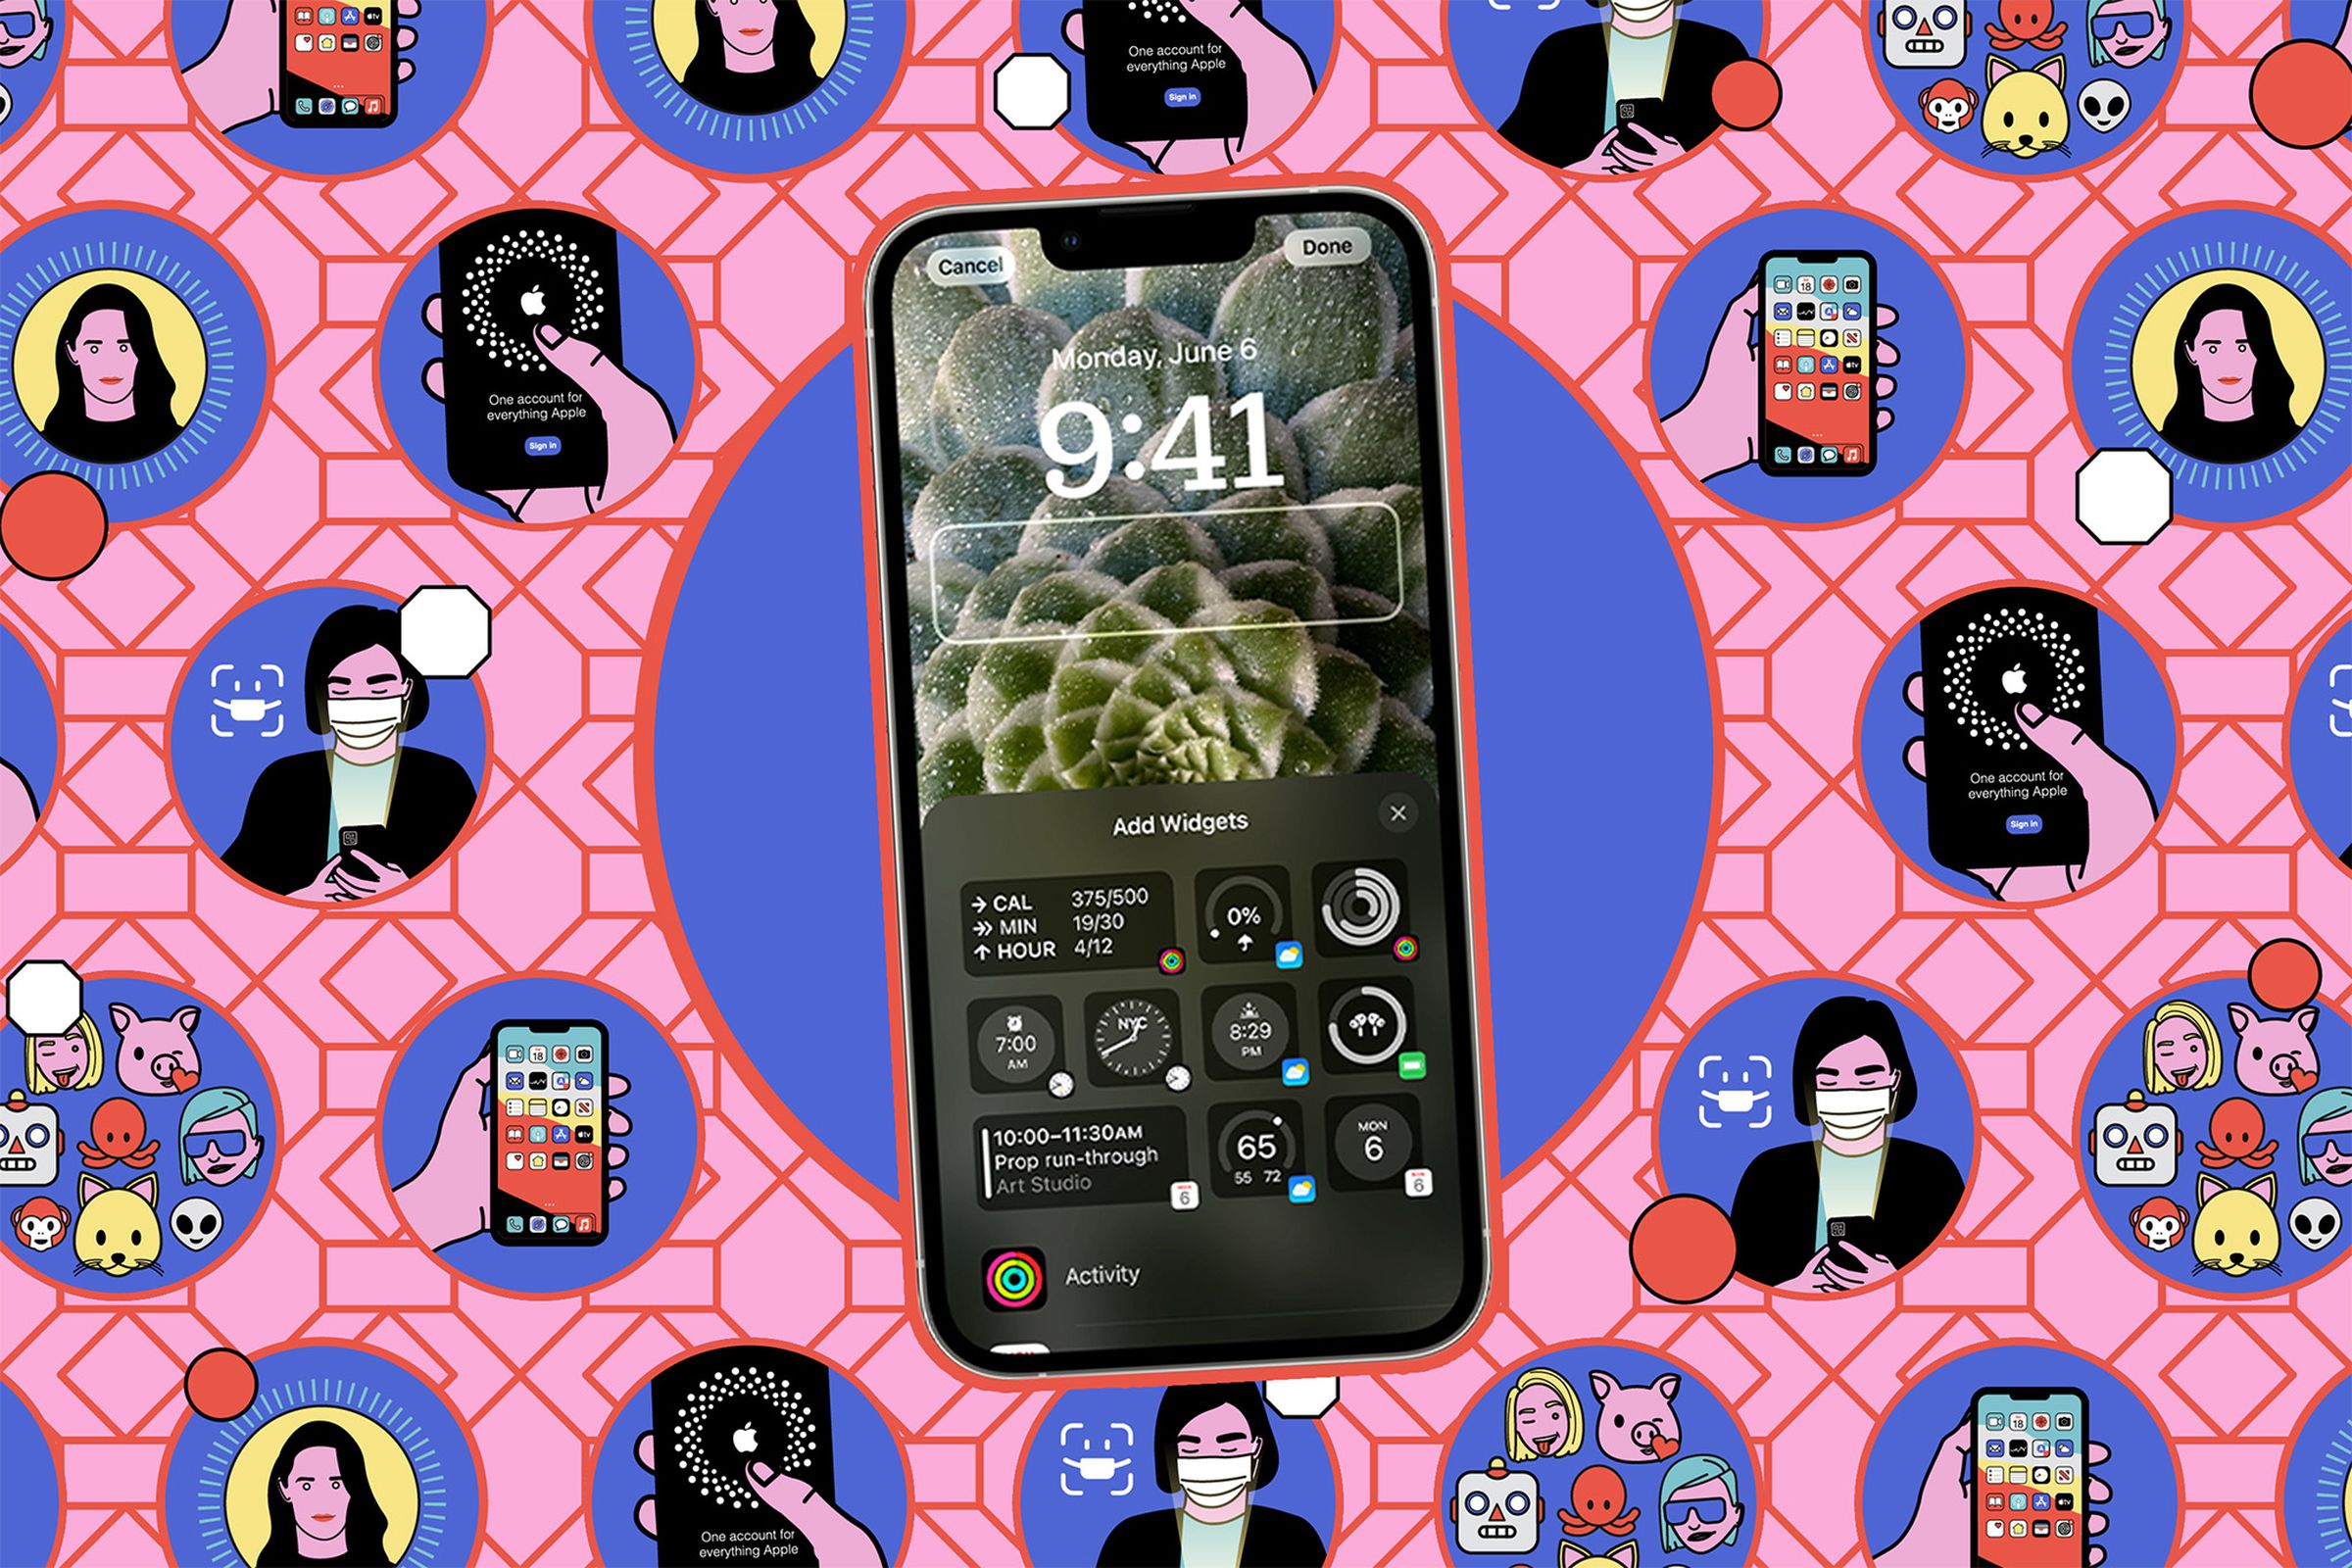 Lock screen widget screen on iPhone against an artful background